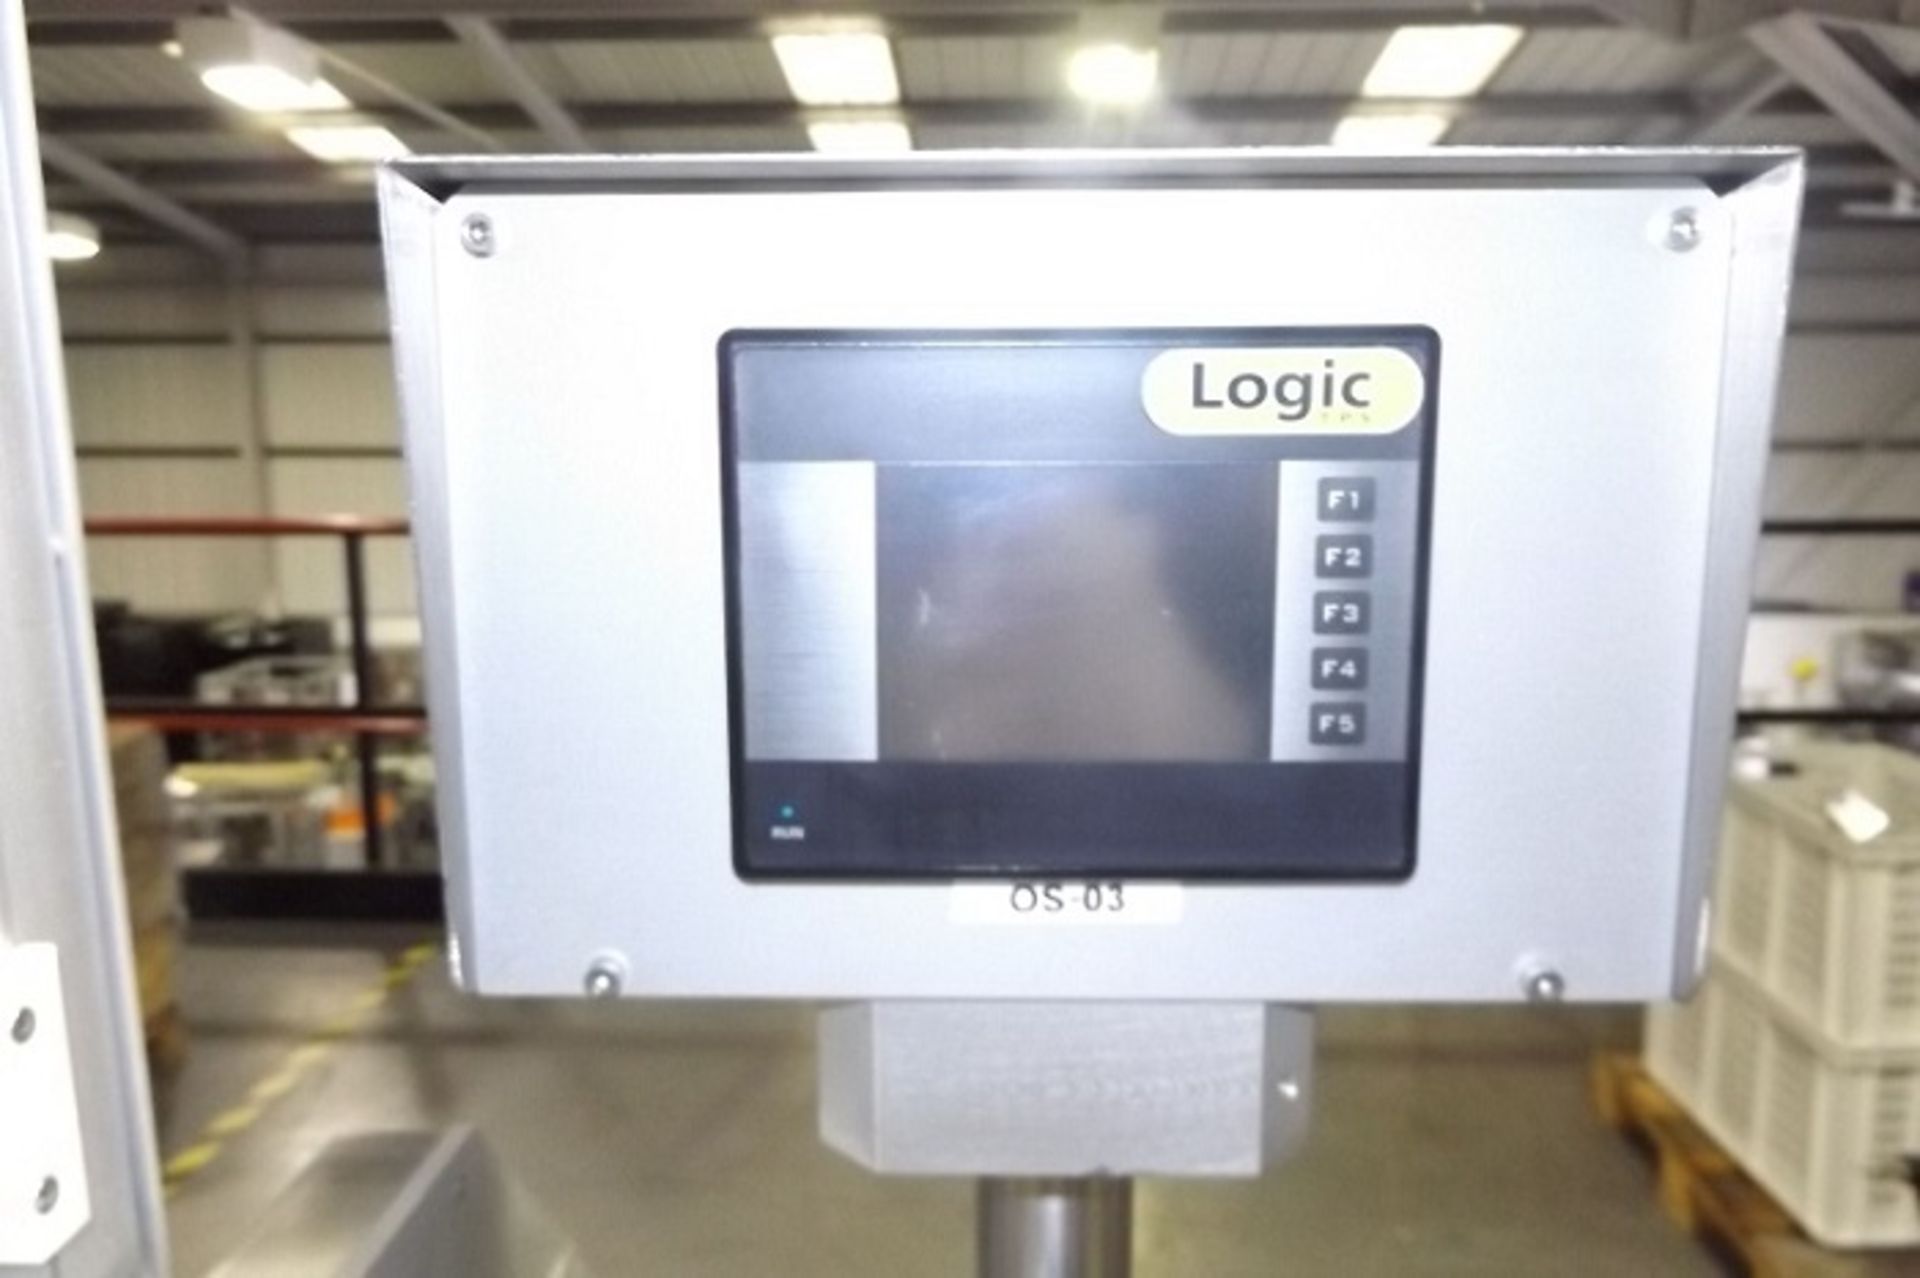 Logic Top-Cert Machine - SOLD AS SEEN (Location Flint UK) - Image 5 of 6